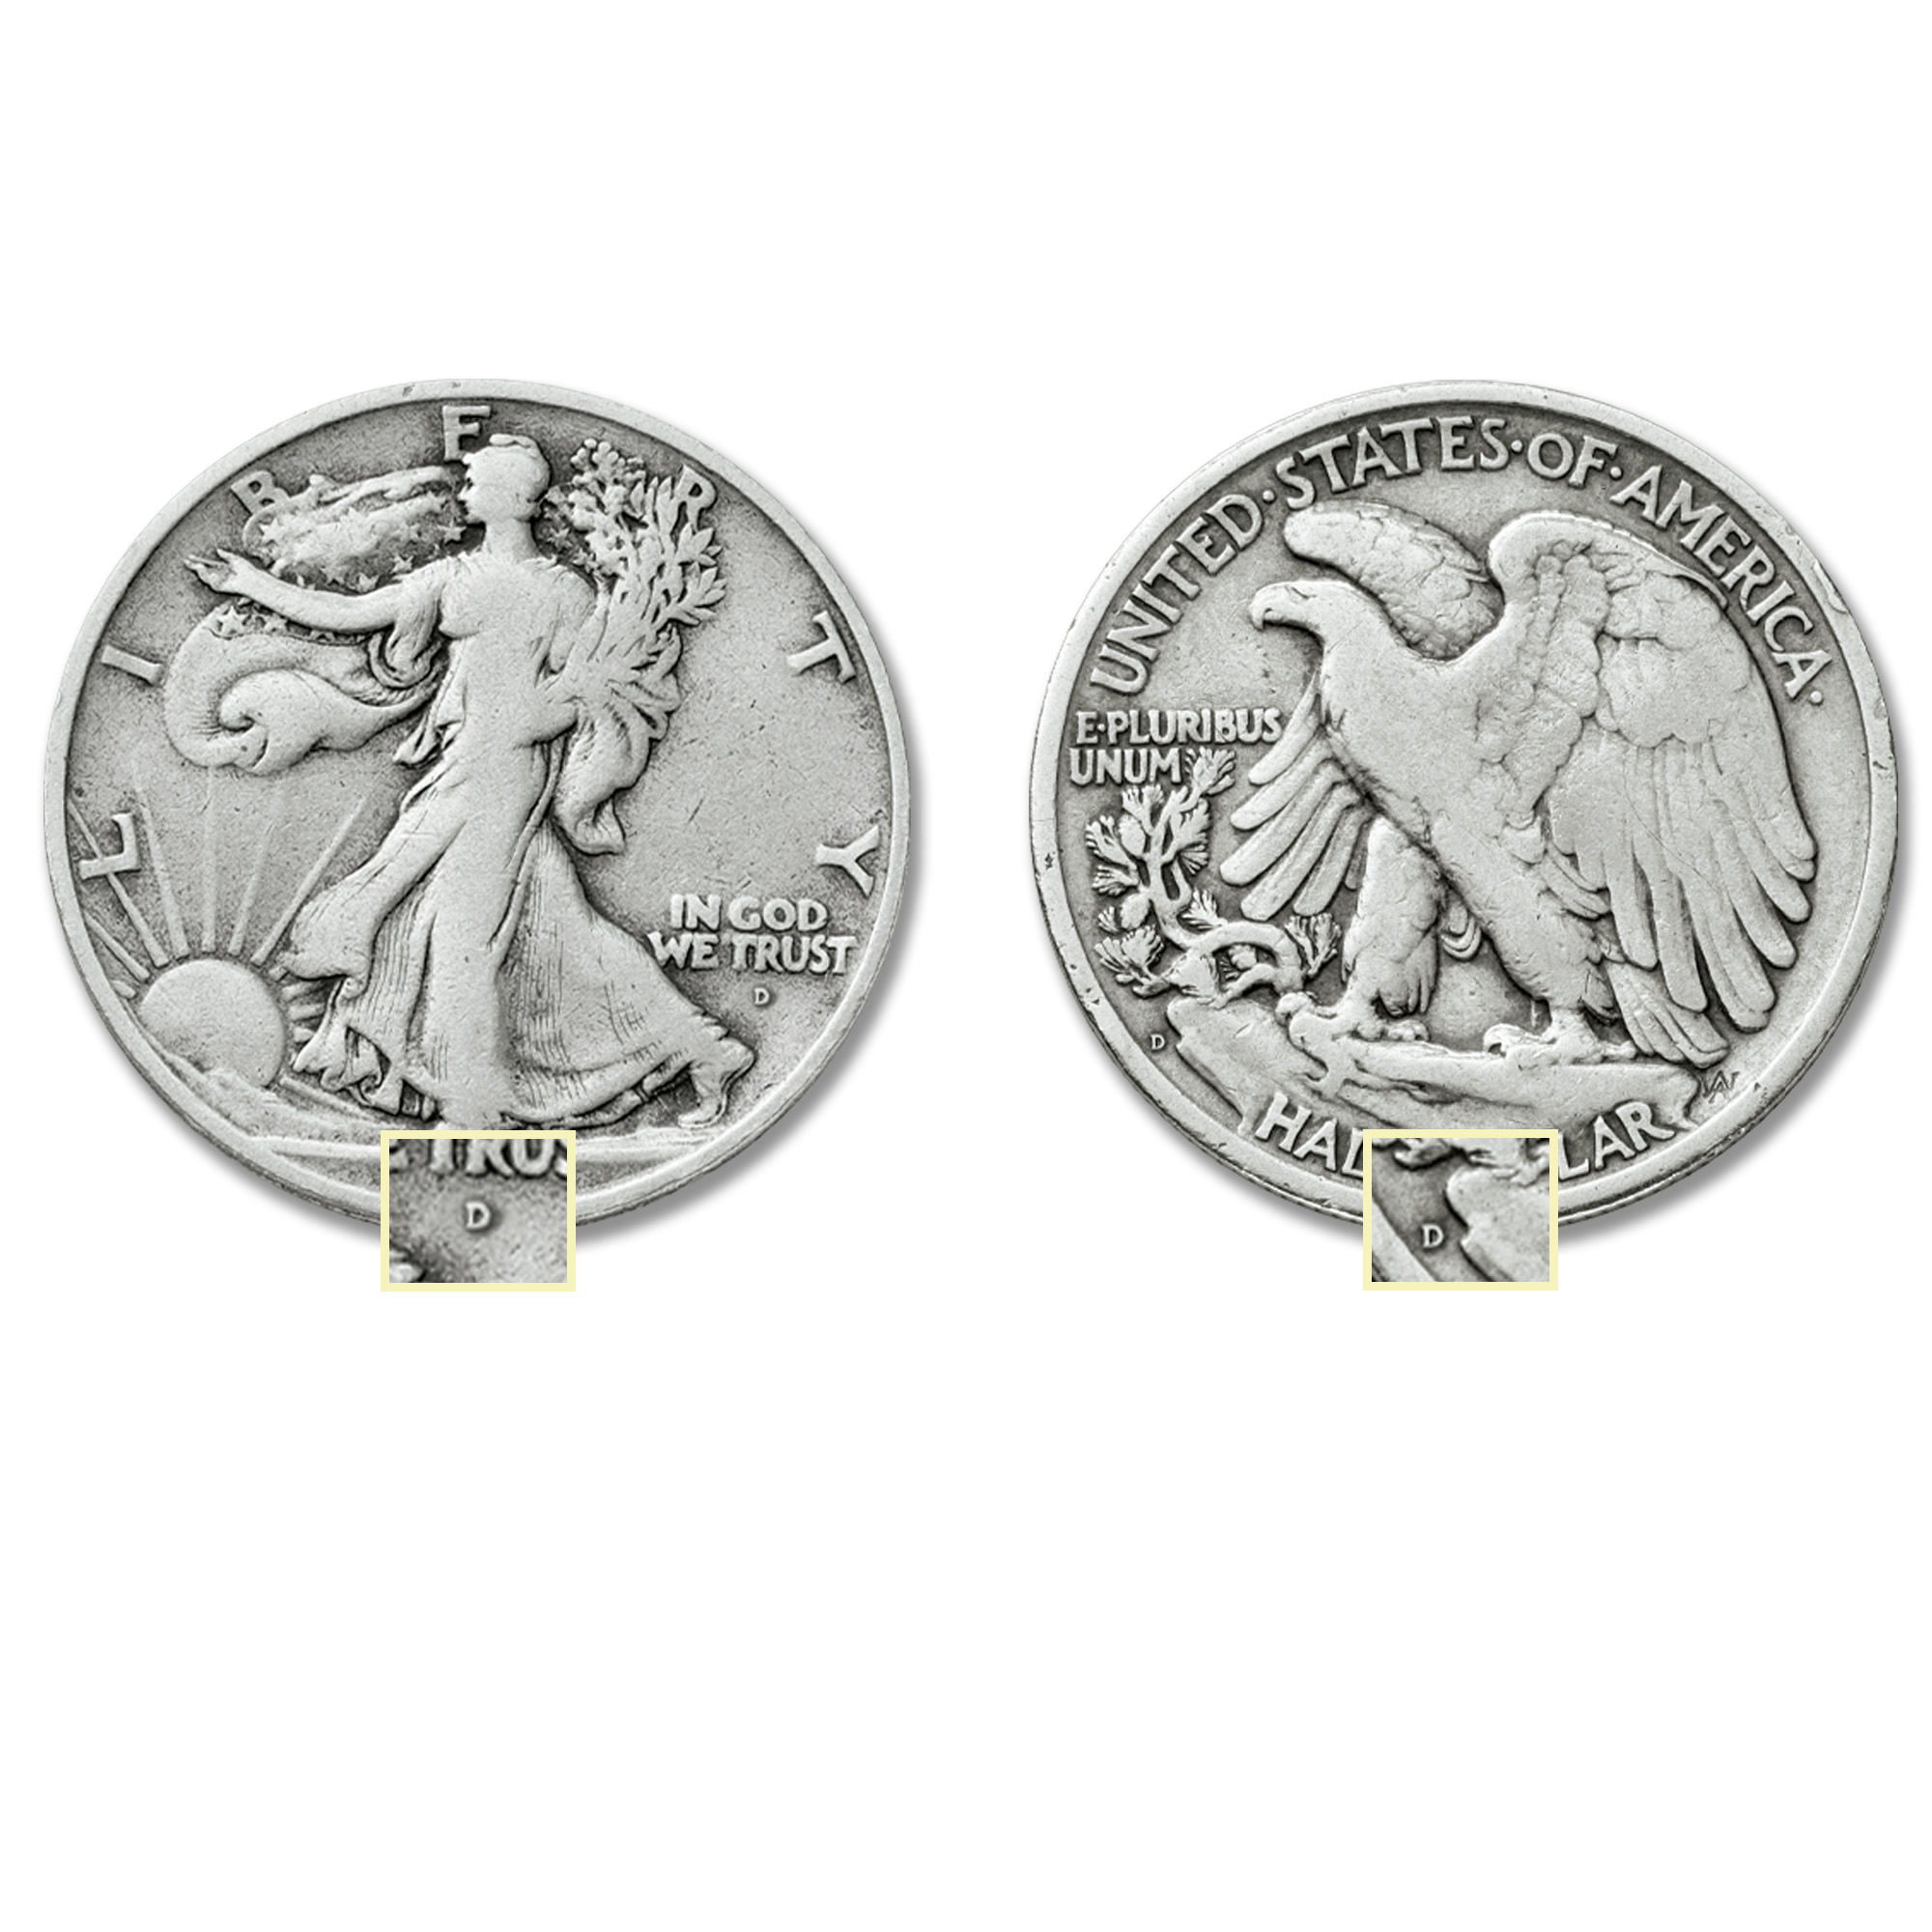 The 1917 Walking Liberty Mint Mark Set